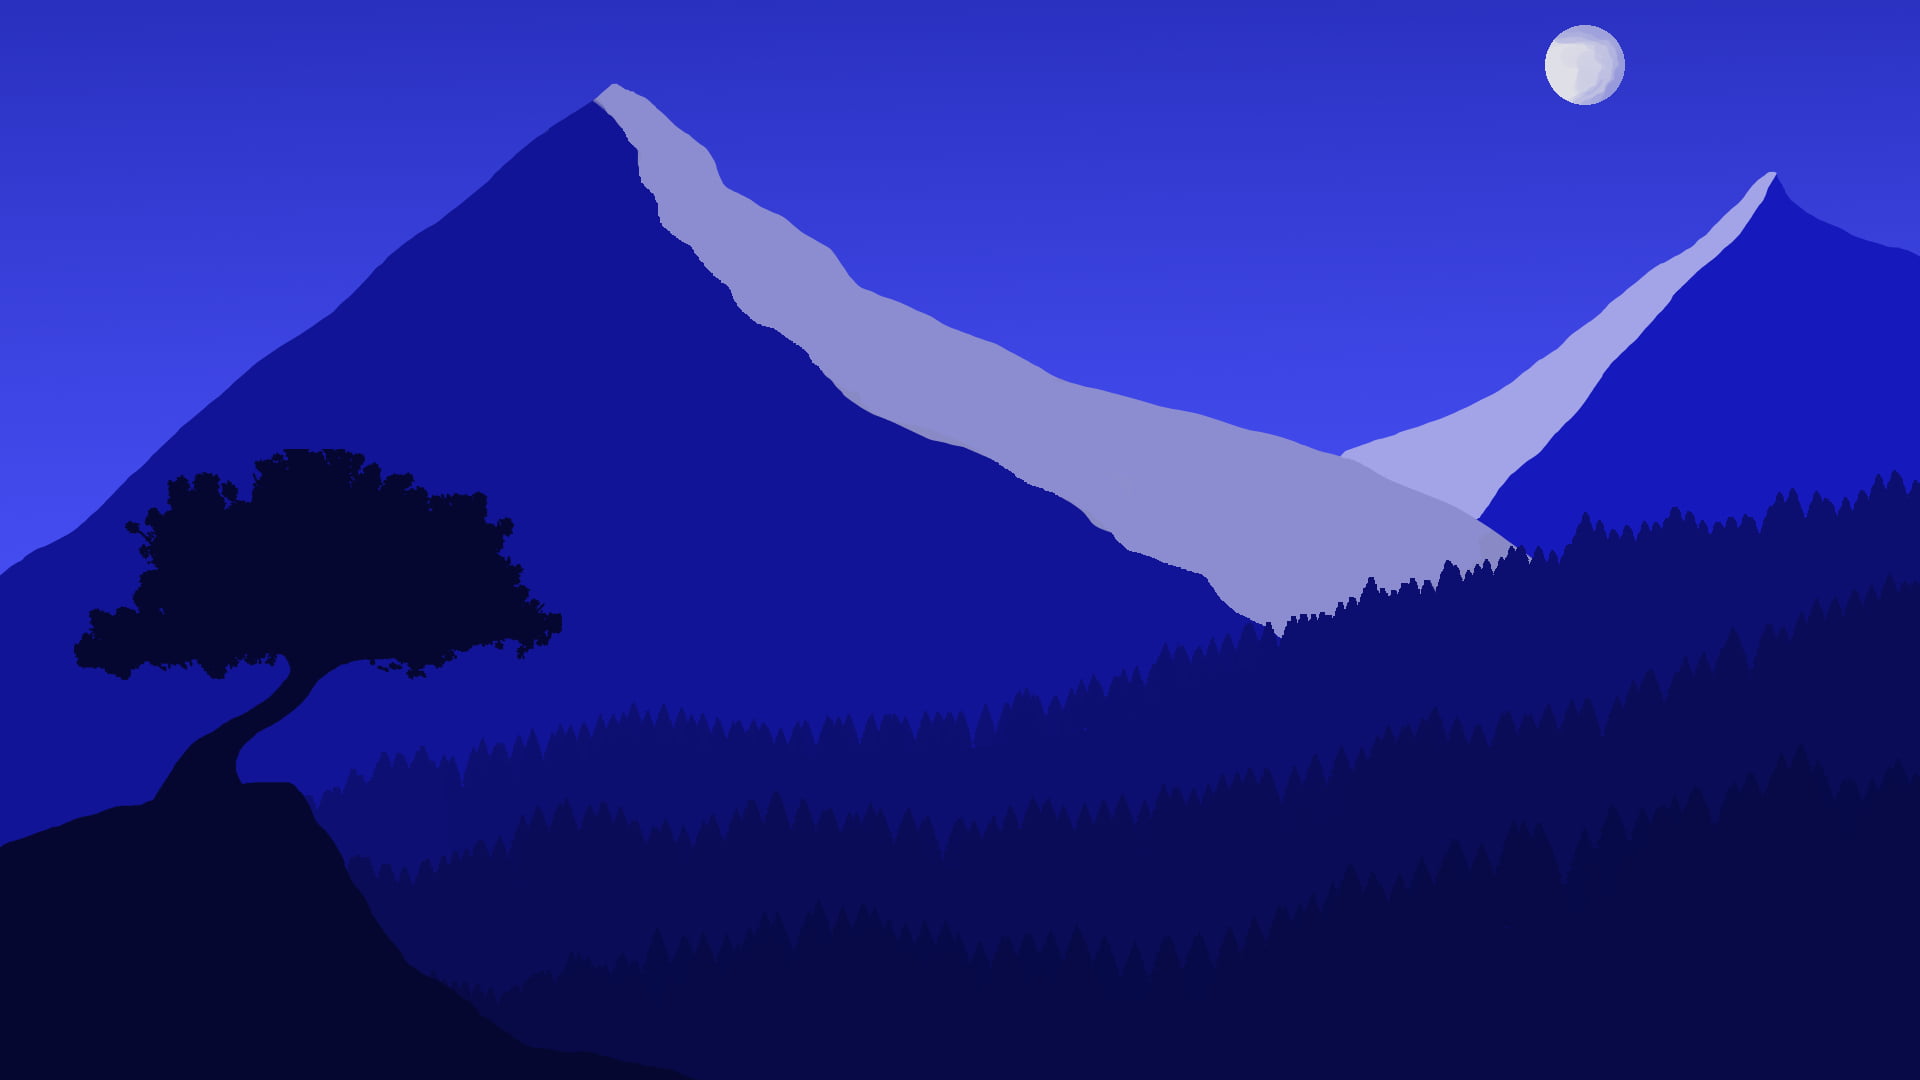 Artistic, Landscape, Blue, Minimalist, Moon, Mountain, Night